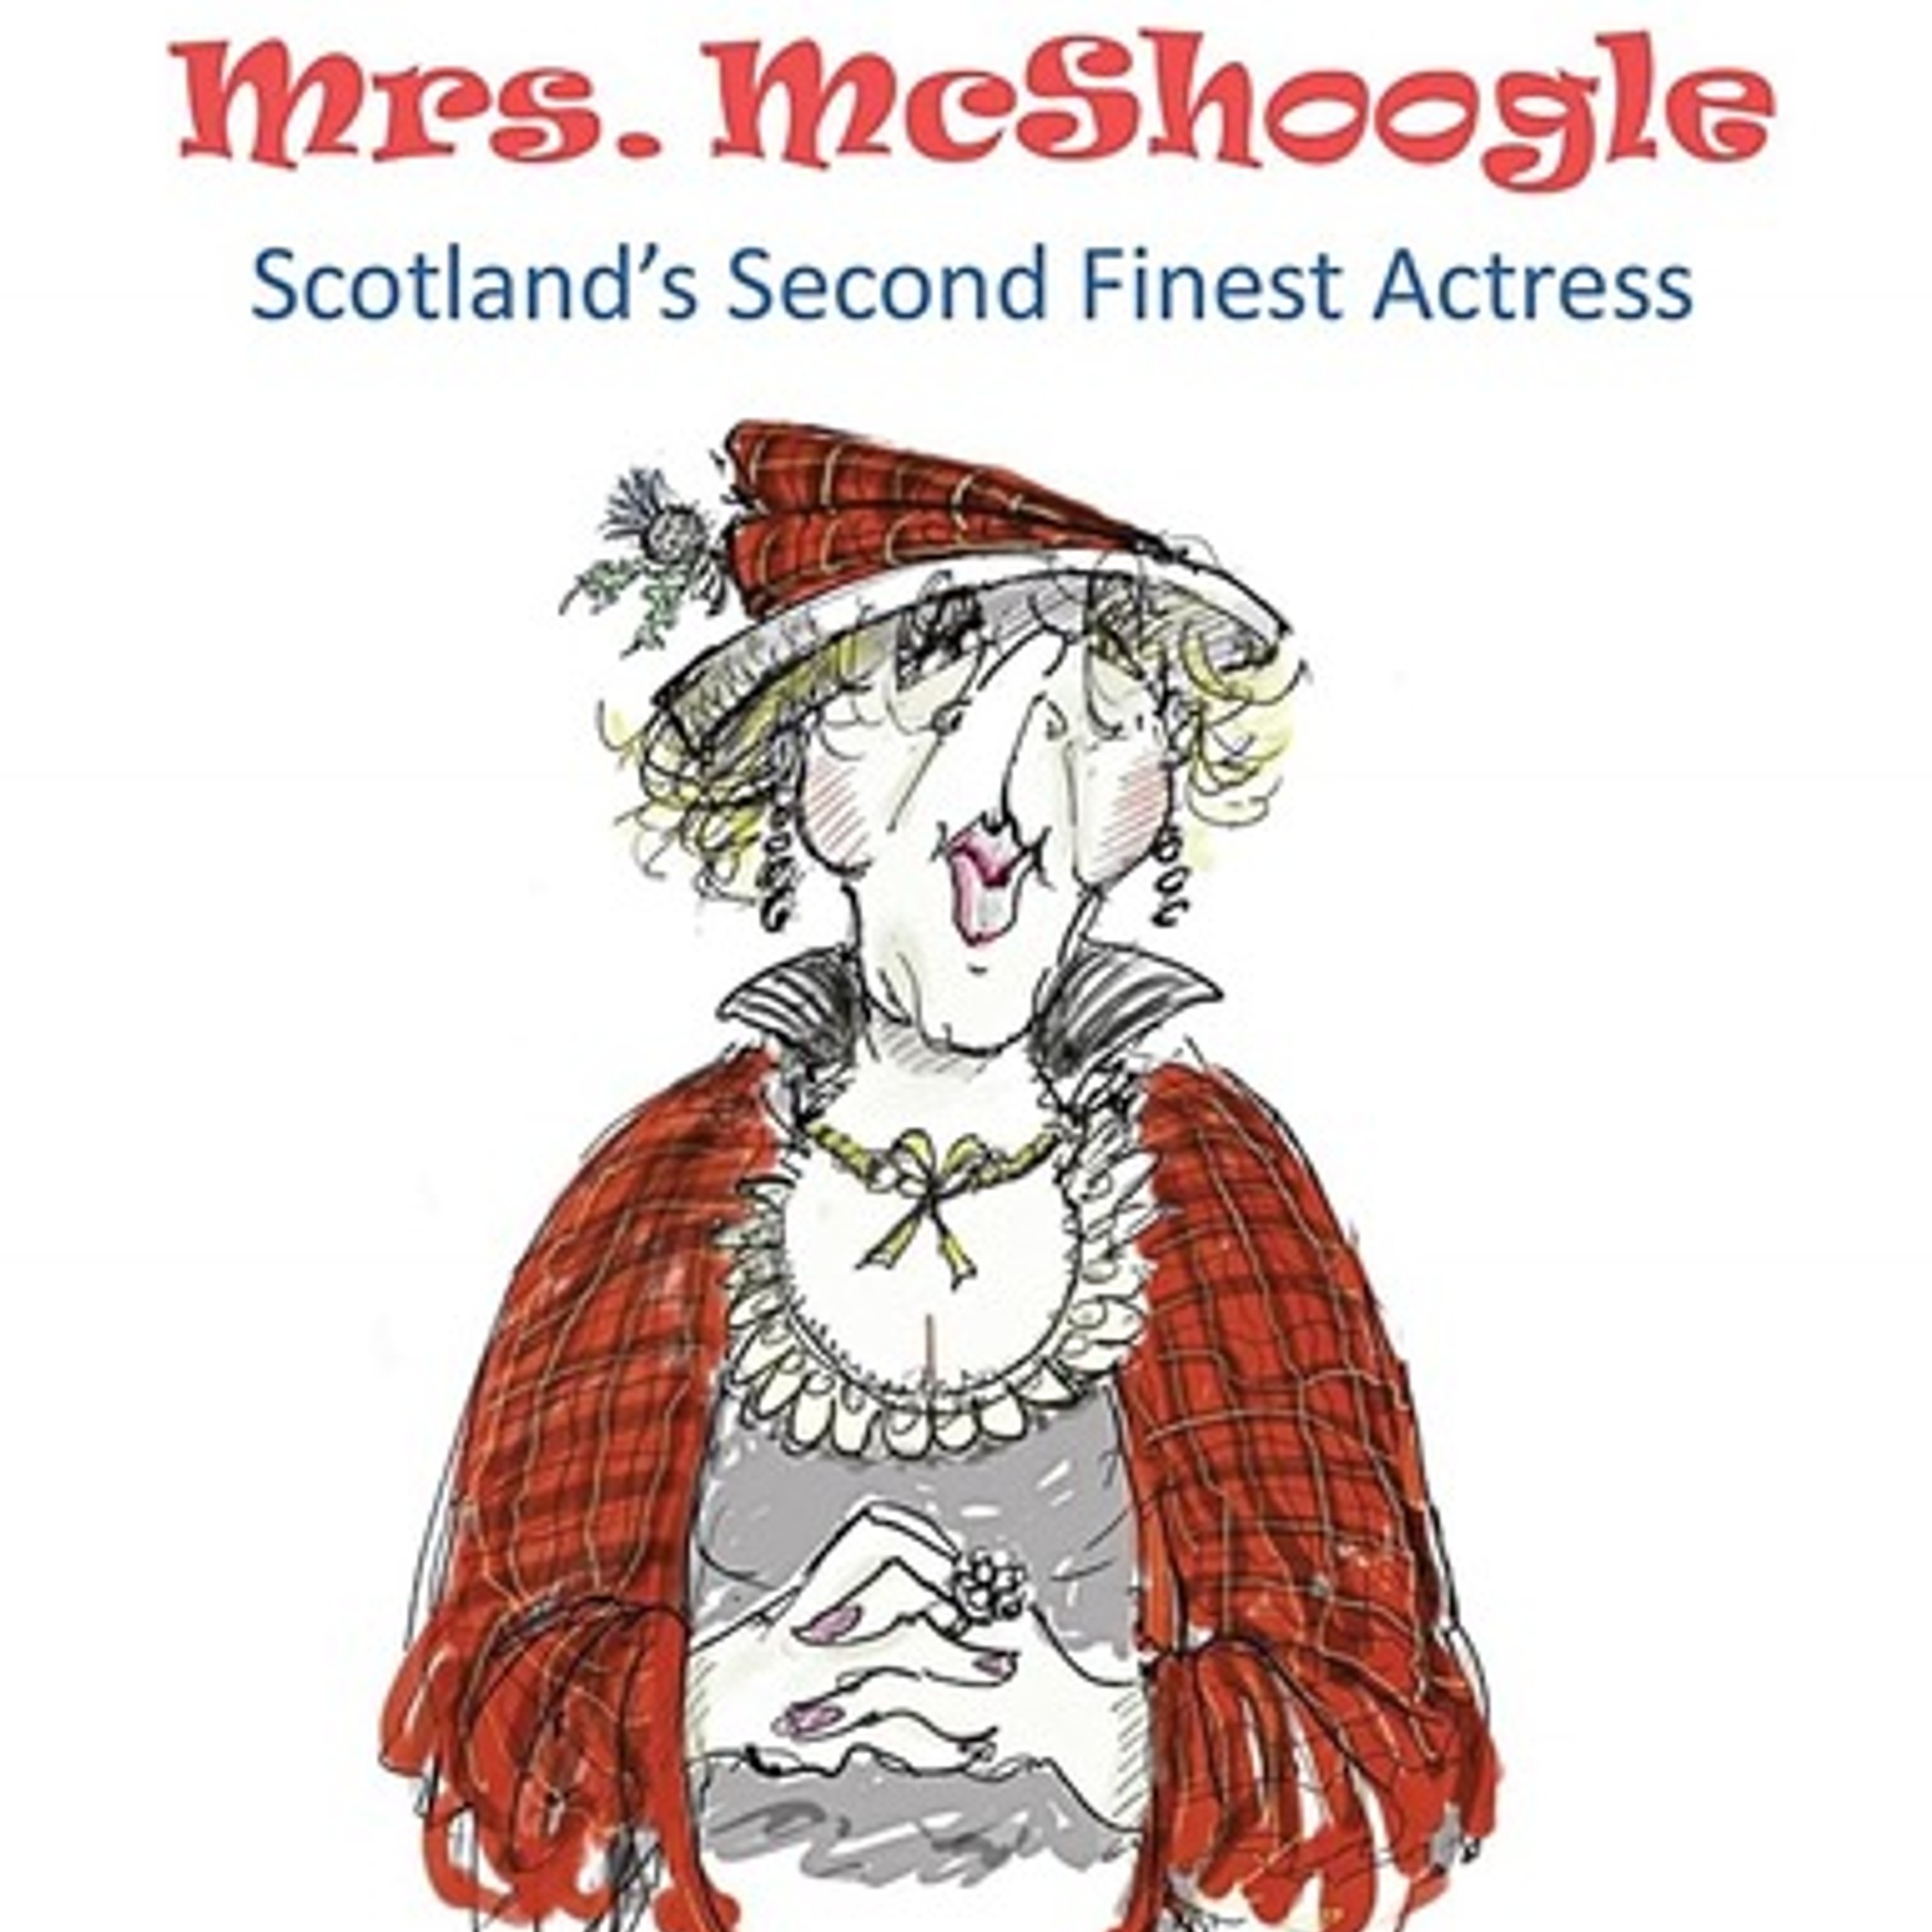 Mrs. McShoogle, Scotland’s Second Finest Actress. Starring Carolyn Pickles.